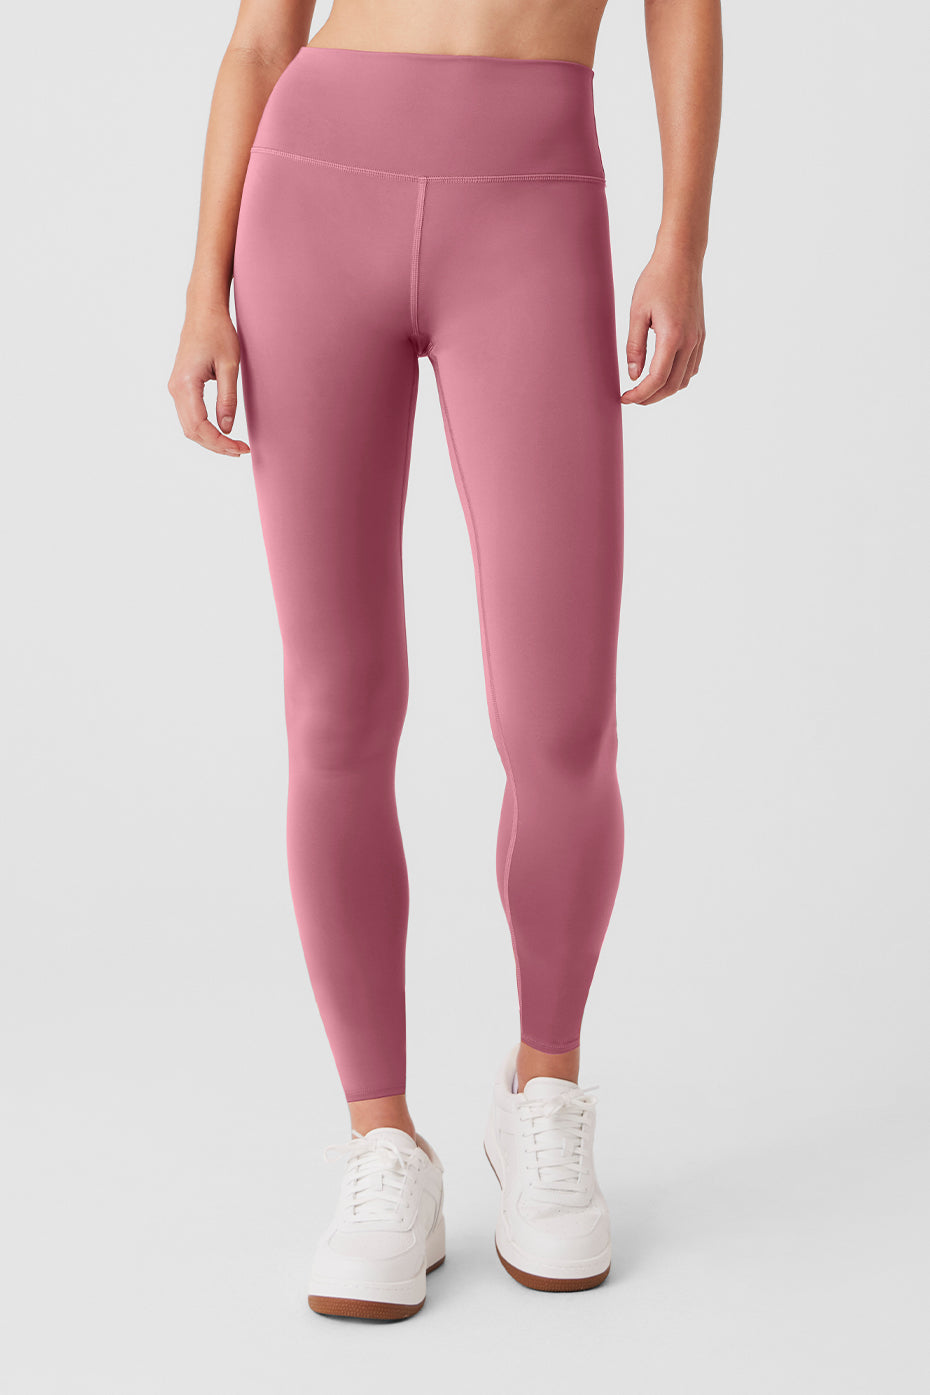 ALO Yoga, Pants & Jumpsuits, Alo Yoga Checkpoint High Waist Pocket 78  Leggings Hot Pink Size Small